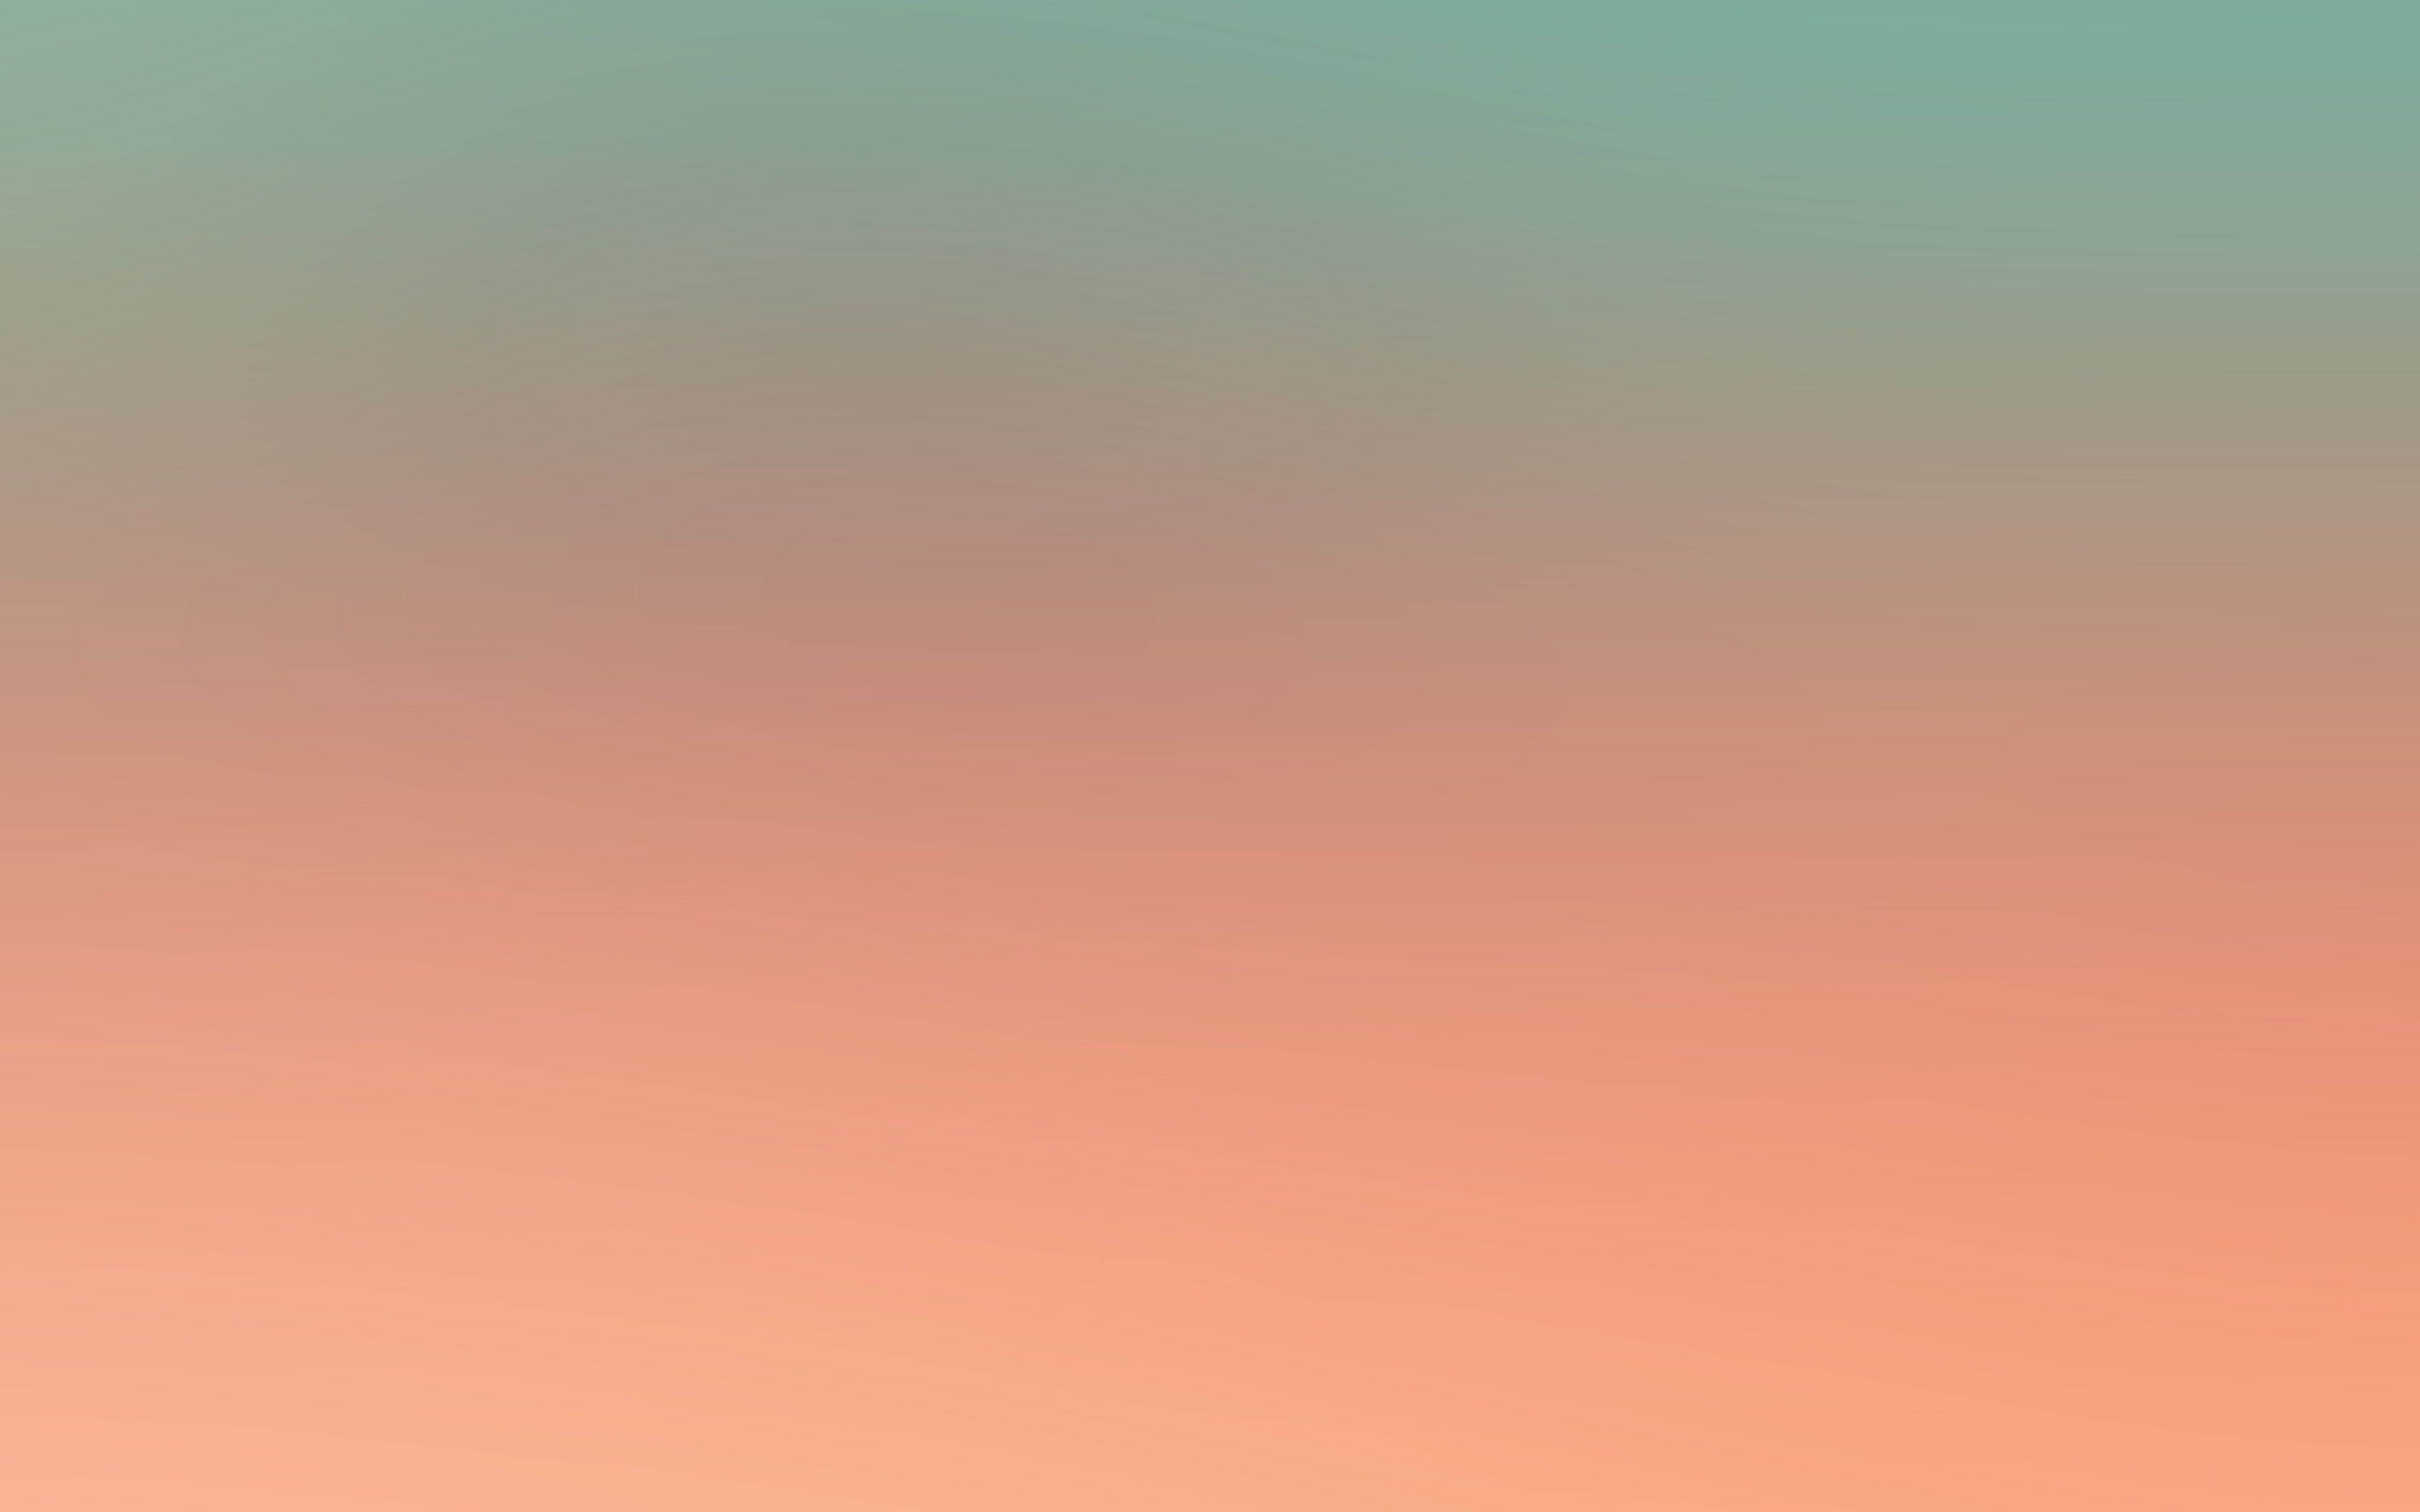 wallpaper for desktop, laptop. green orange soft pastel gradation blur